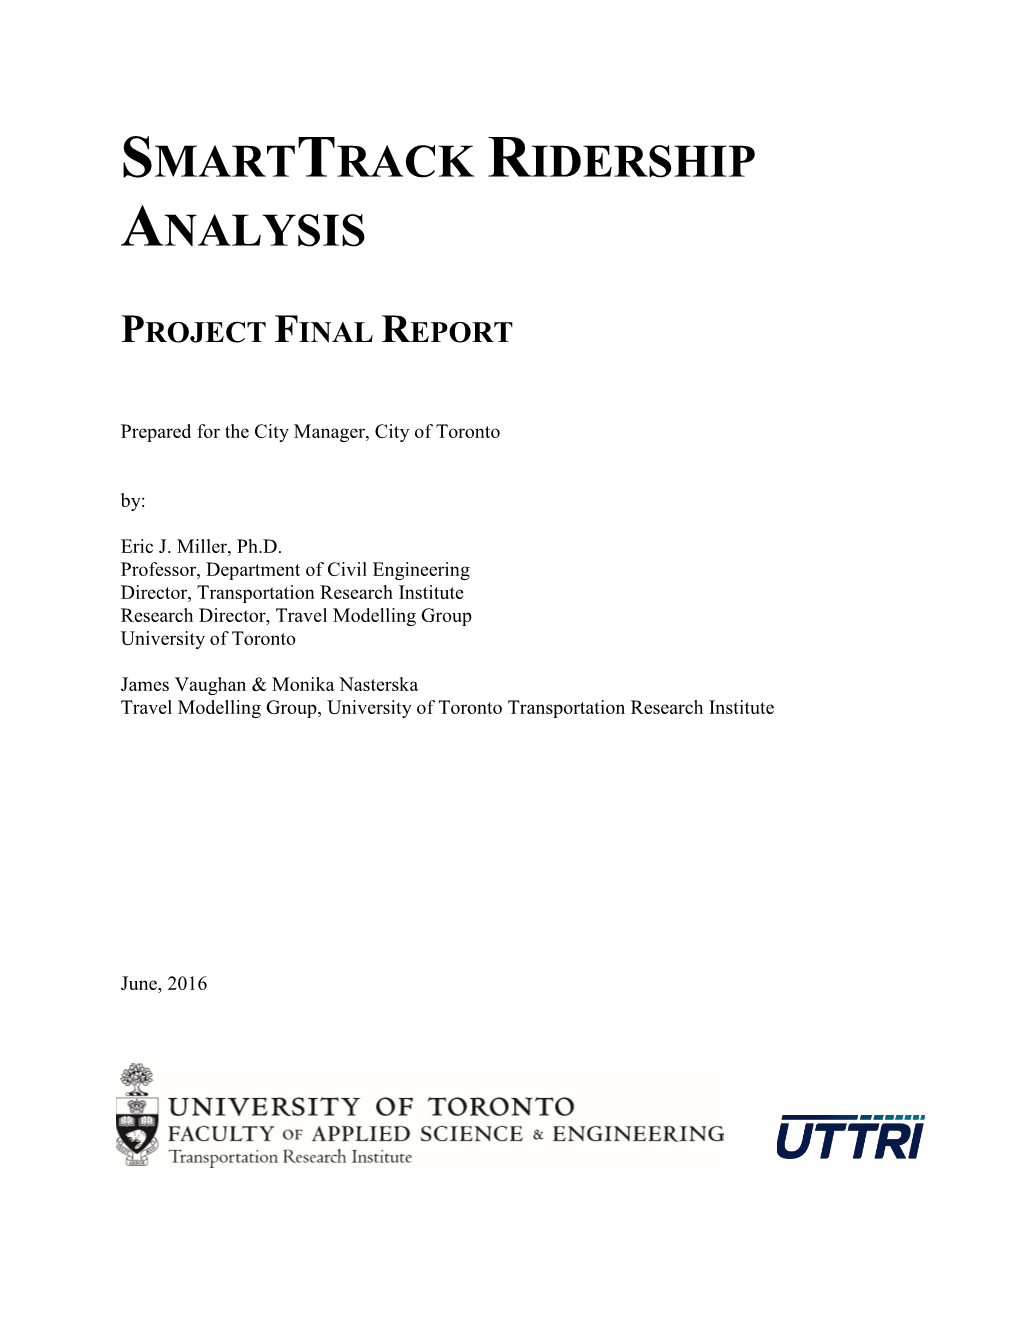 Smarttrack Ridership Analysis